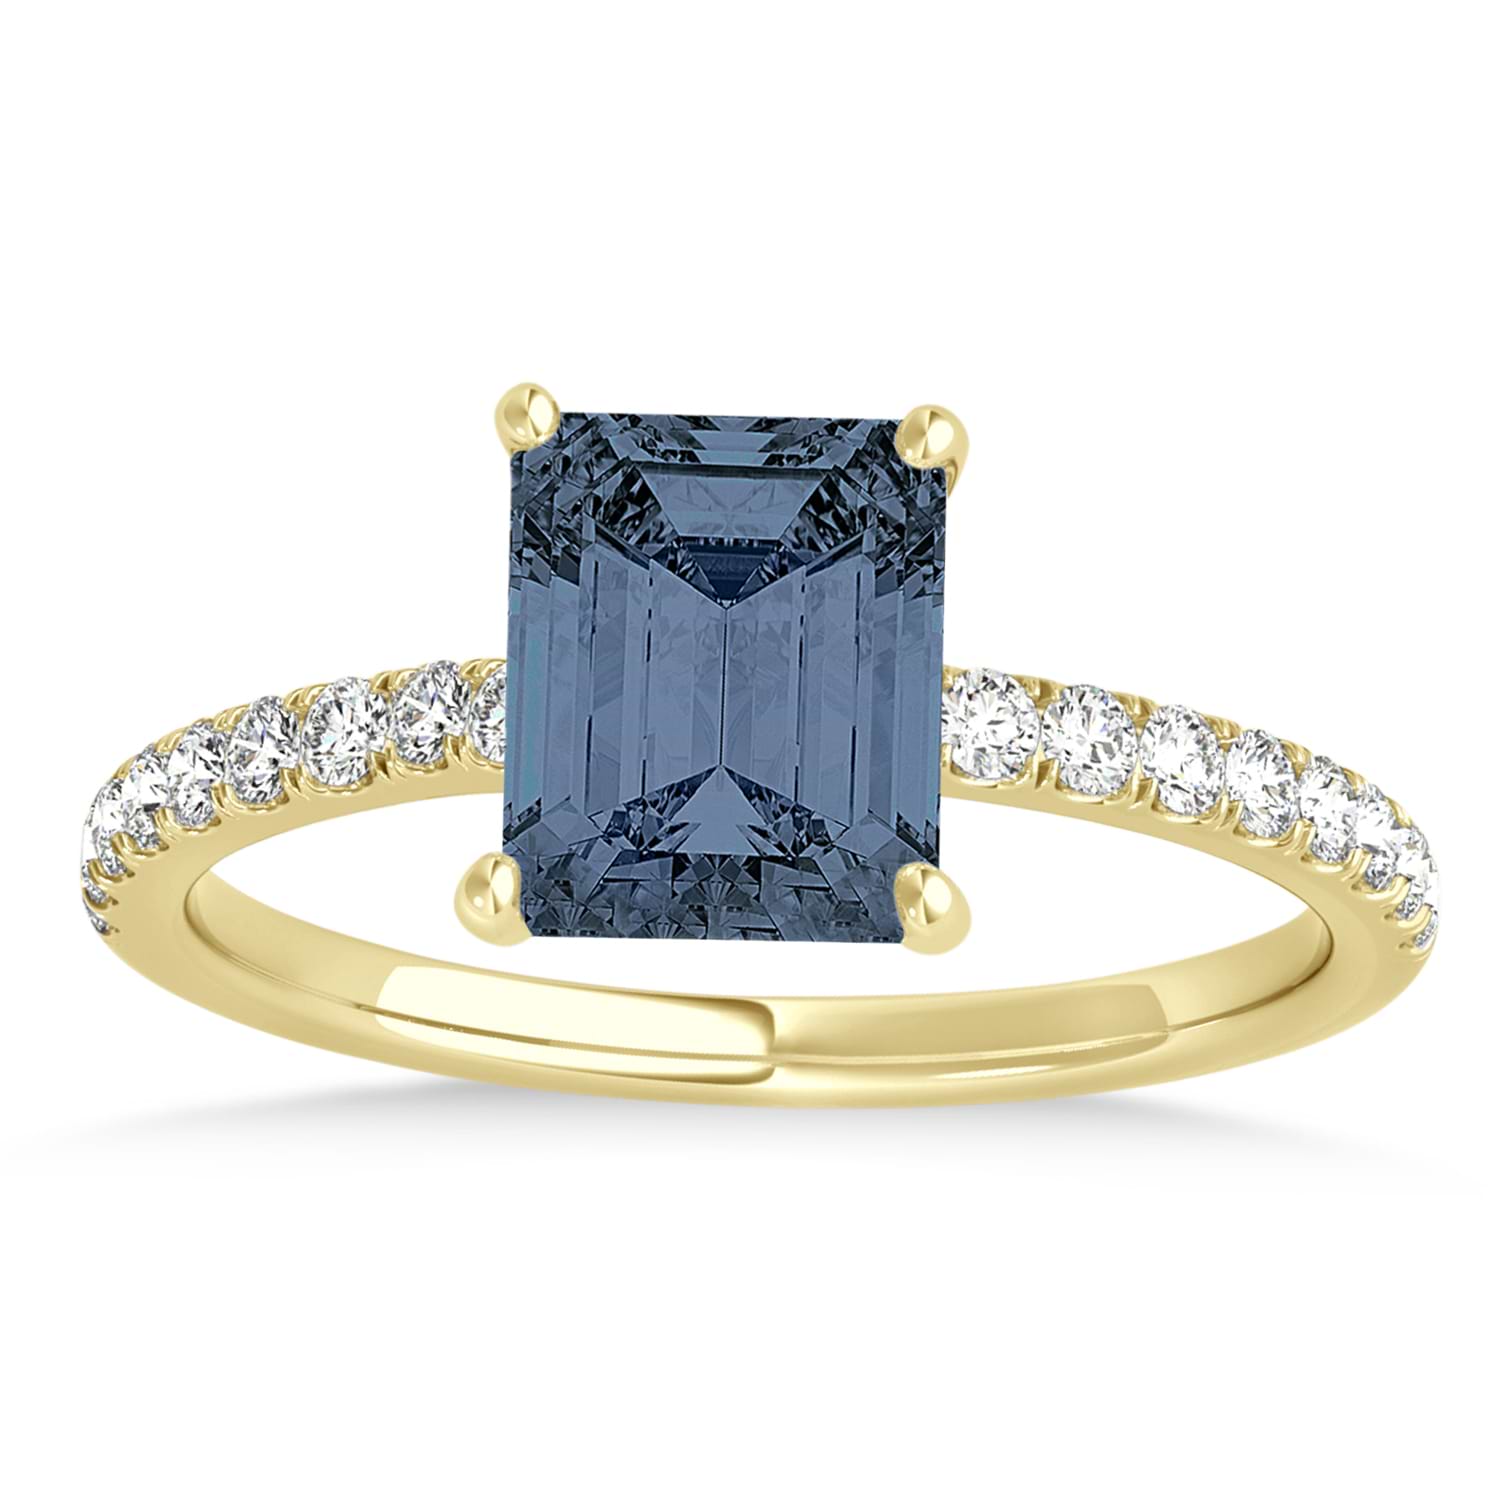 Emerald Gray Spinel & Diamond Single Row Hidden Halo Engagement Ring 18k Yellow Gold (1.31ct)